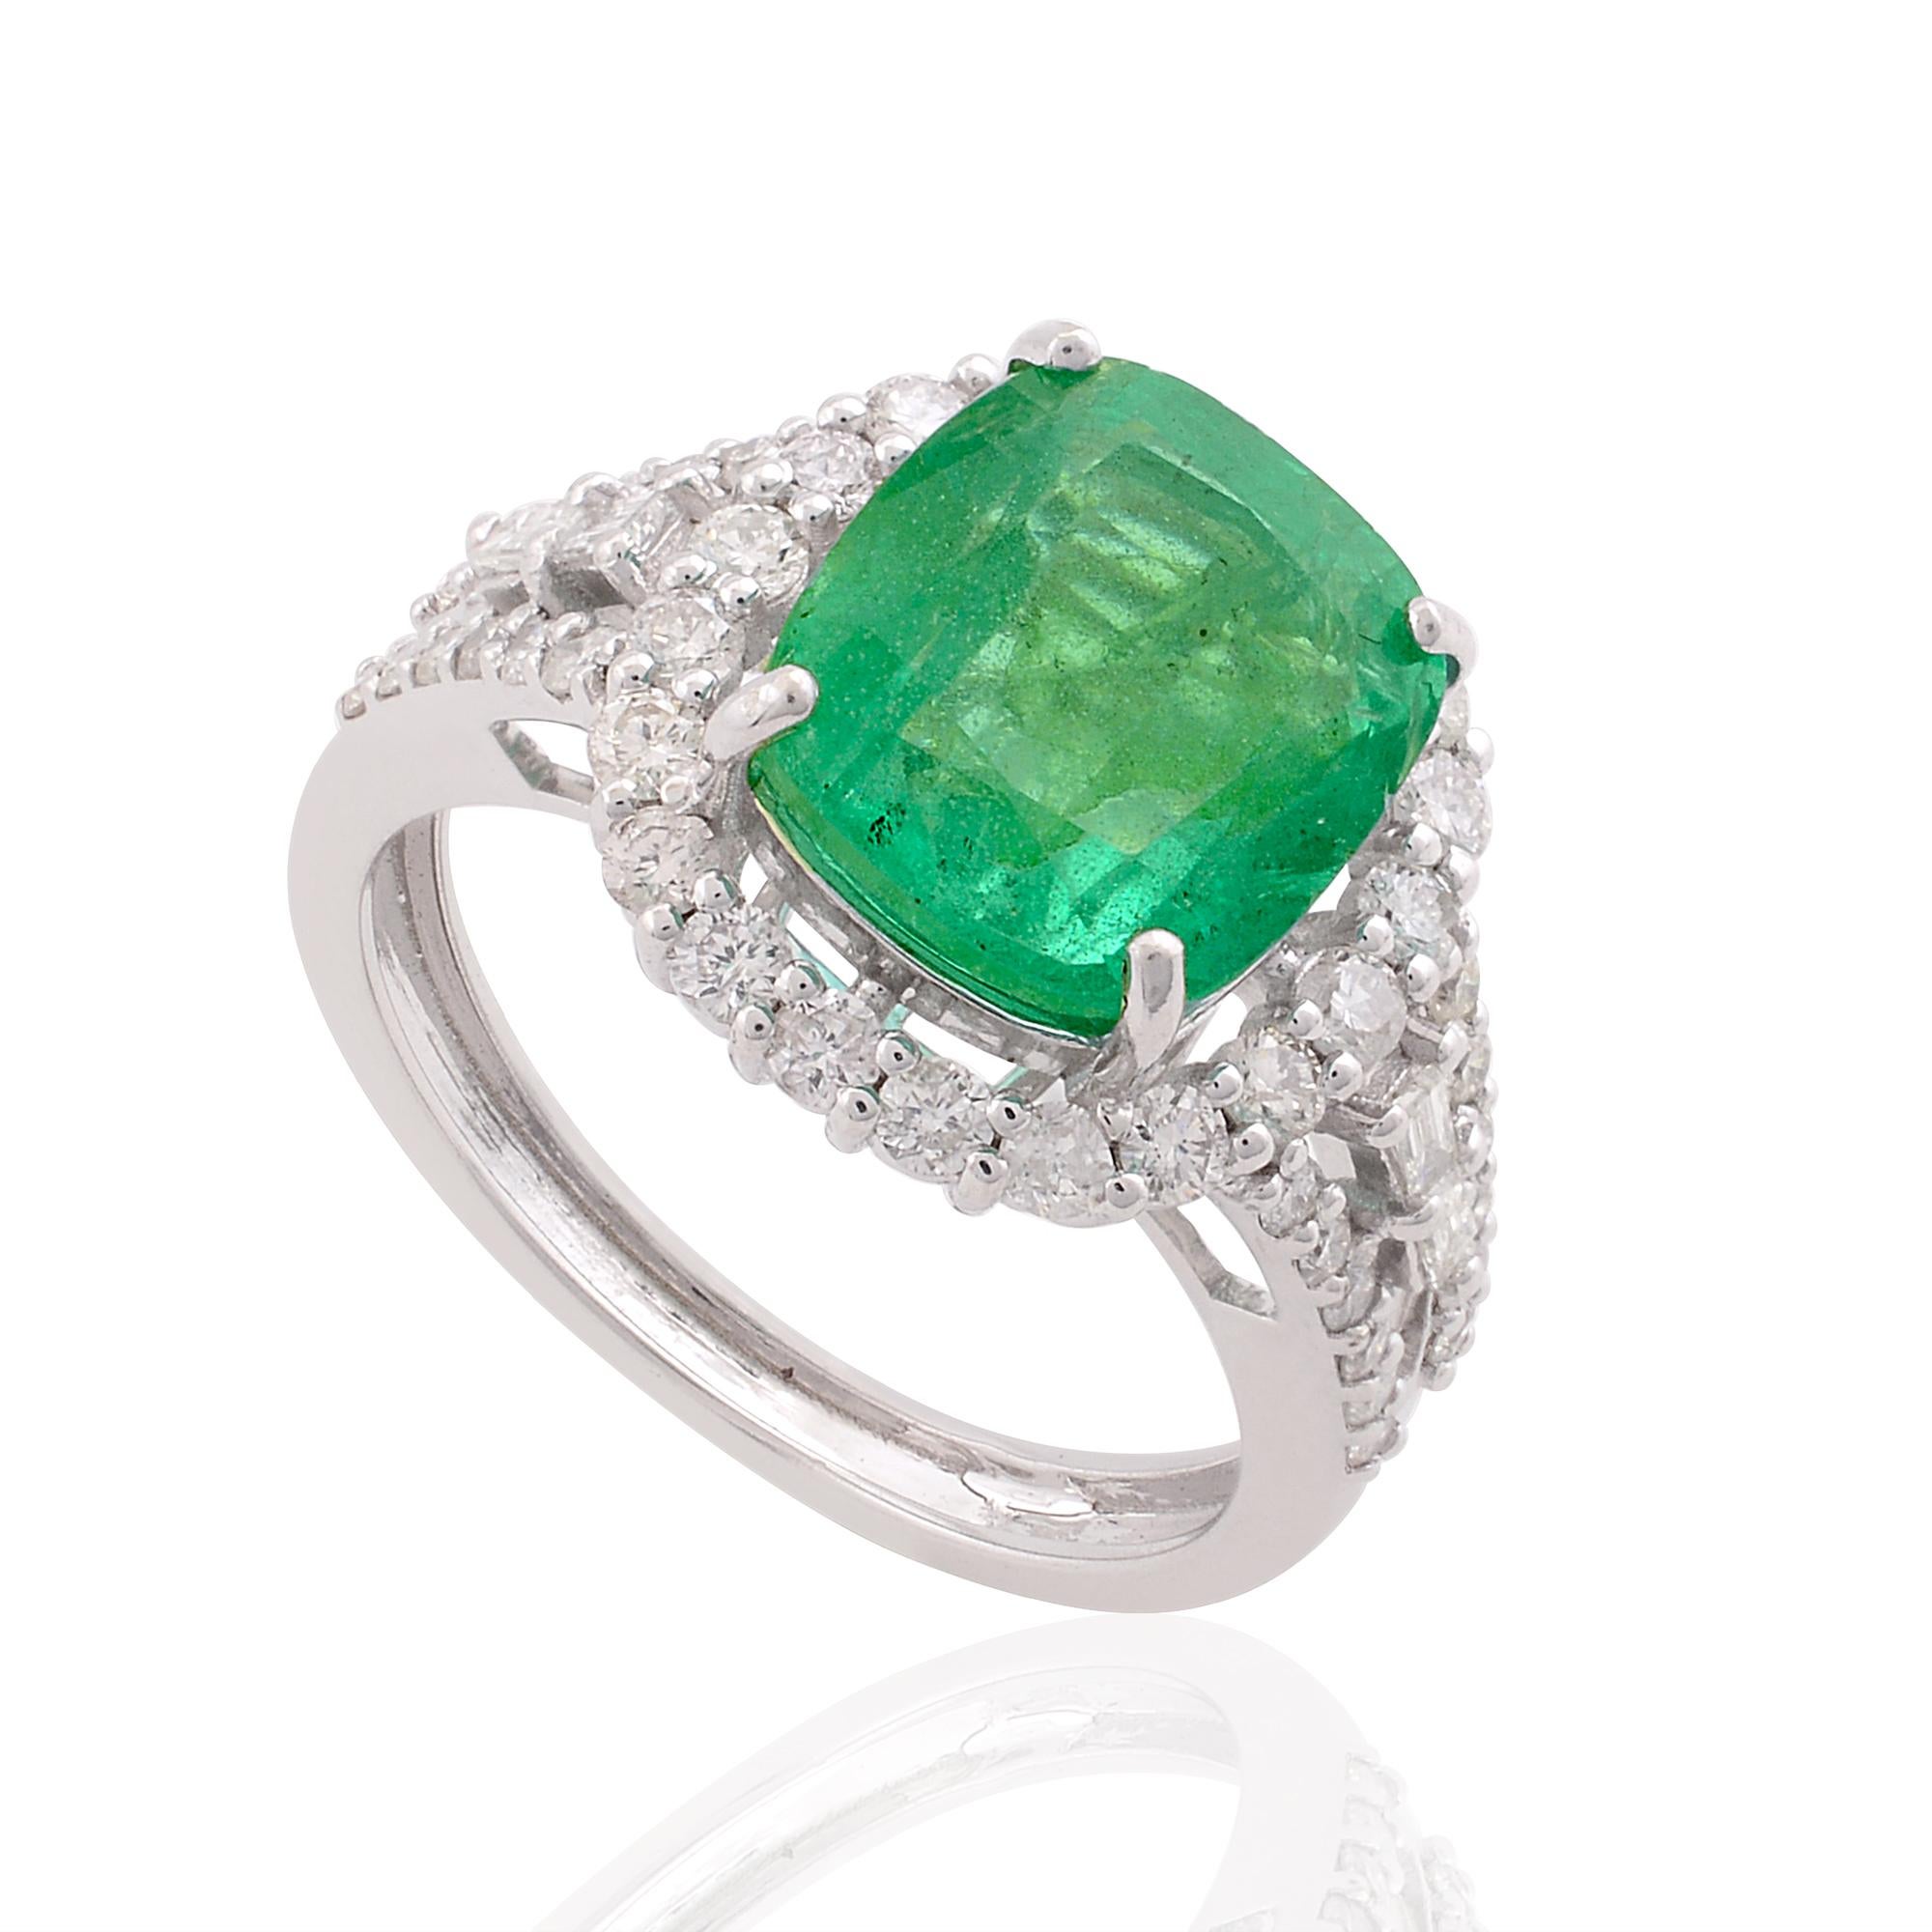 For Sale:  Natural Emerald Gemstone Cocktail Ring Diamond 10 Karat White Gold Fine Jewelry 3